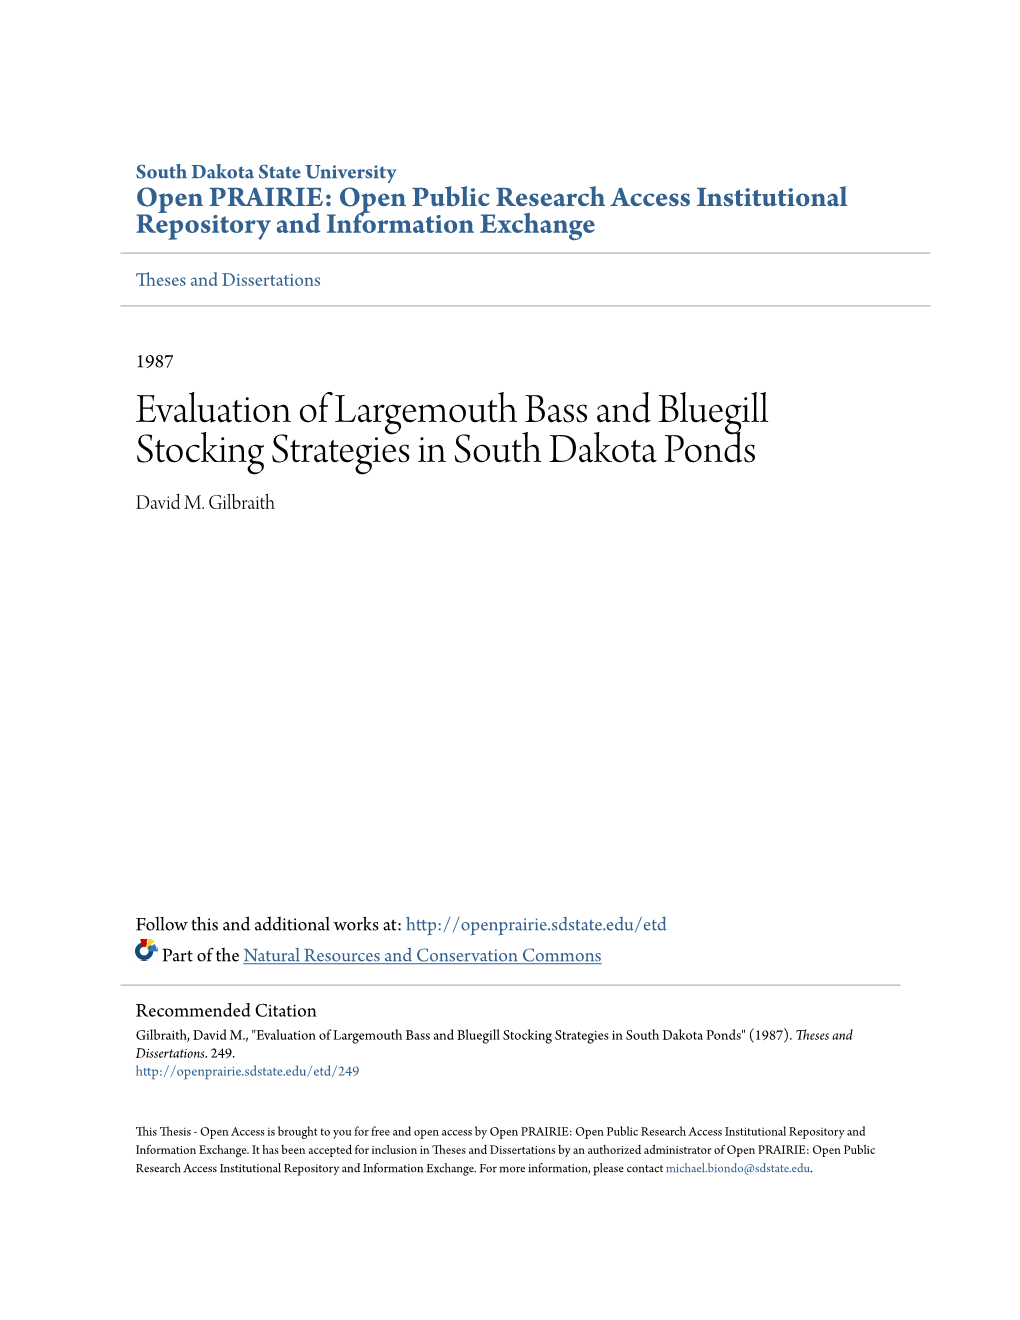 Evaluation of Largemouth Bass and Bluegill Stocking Strategies in South Dakota Ponds David M